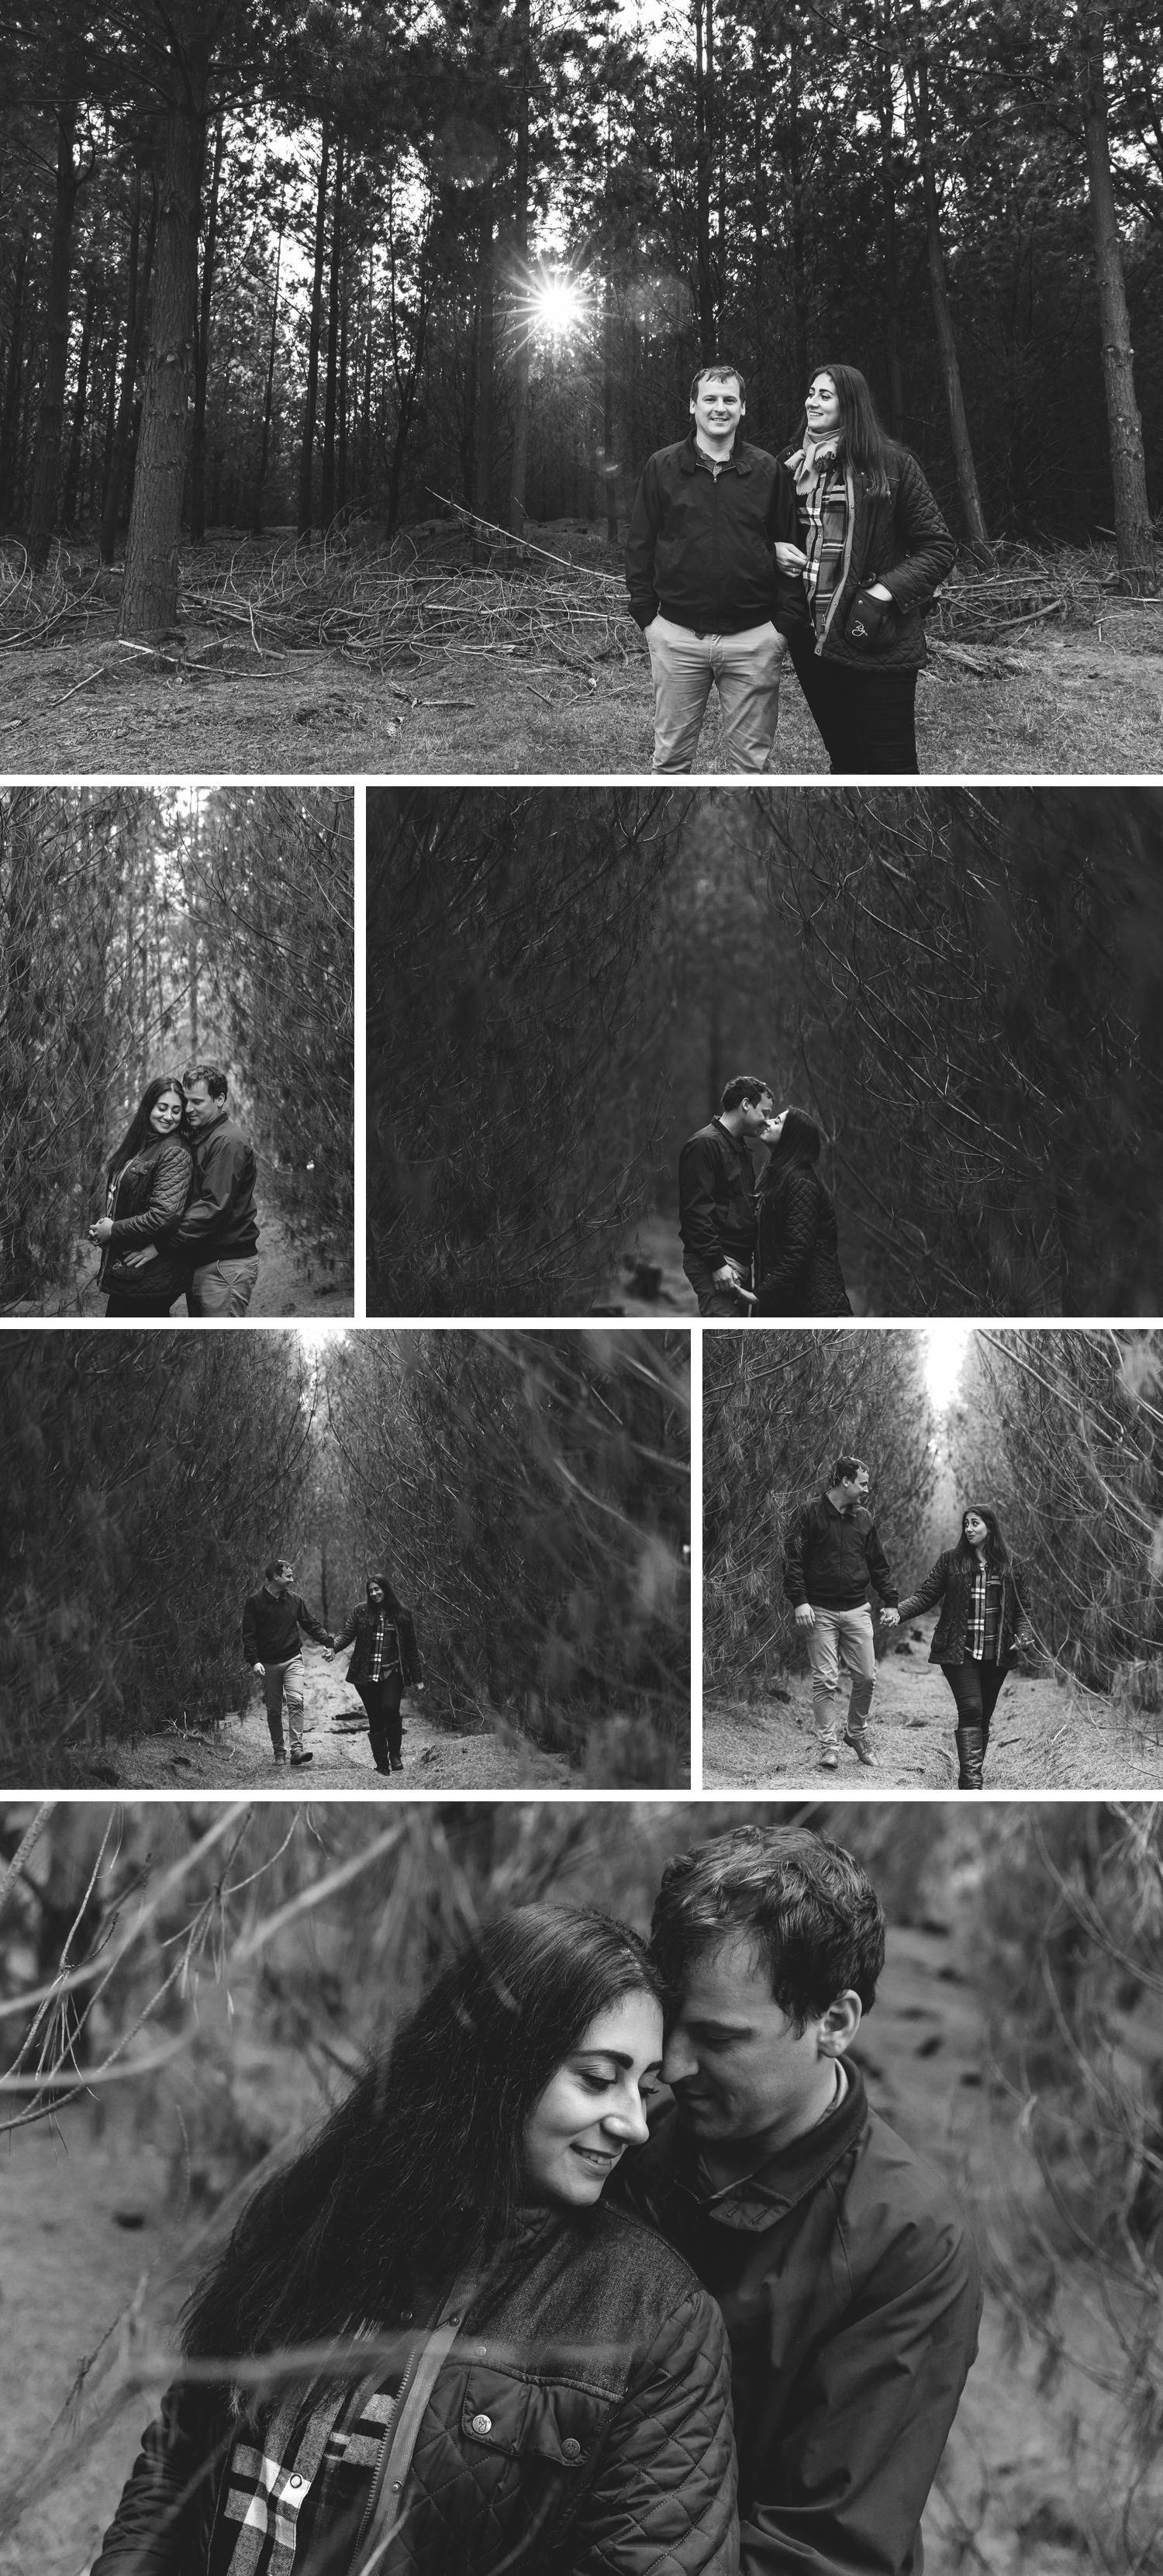 Pine Plantation, Engagement Shoot, Forrest Rain Photoshoot, Couple Embracing by Danae Studios